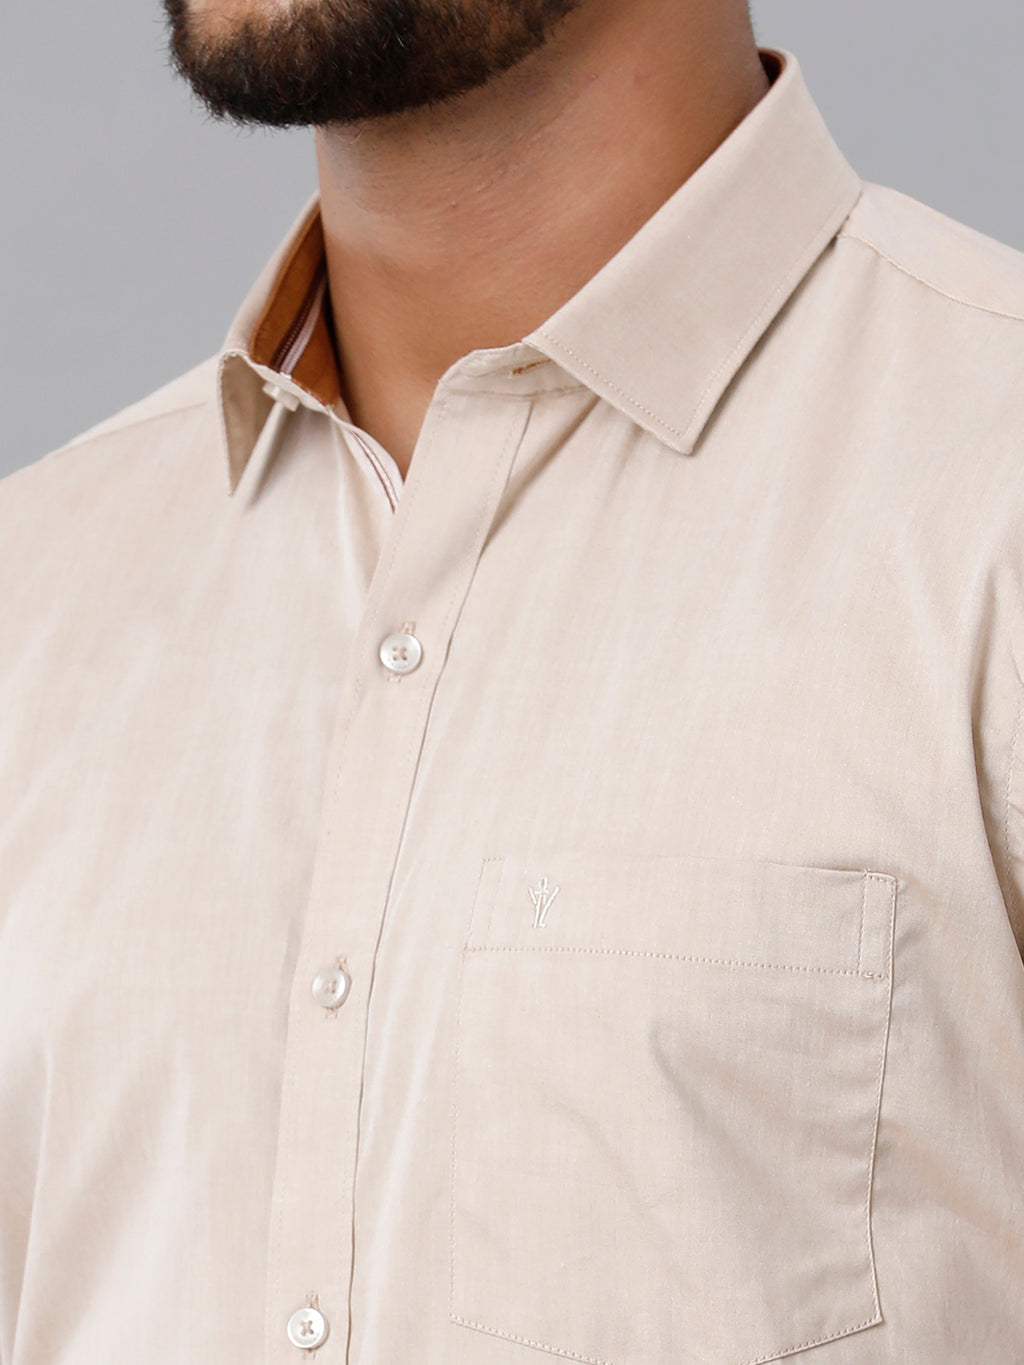 Mens Premium Cotton Formal Shirt Half Sleeves Light Brown MH G113